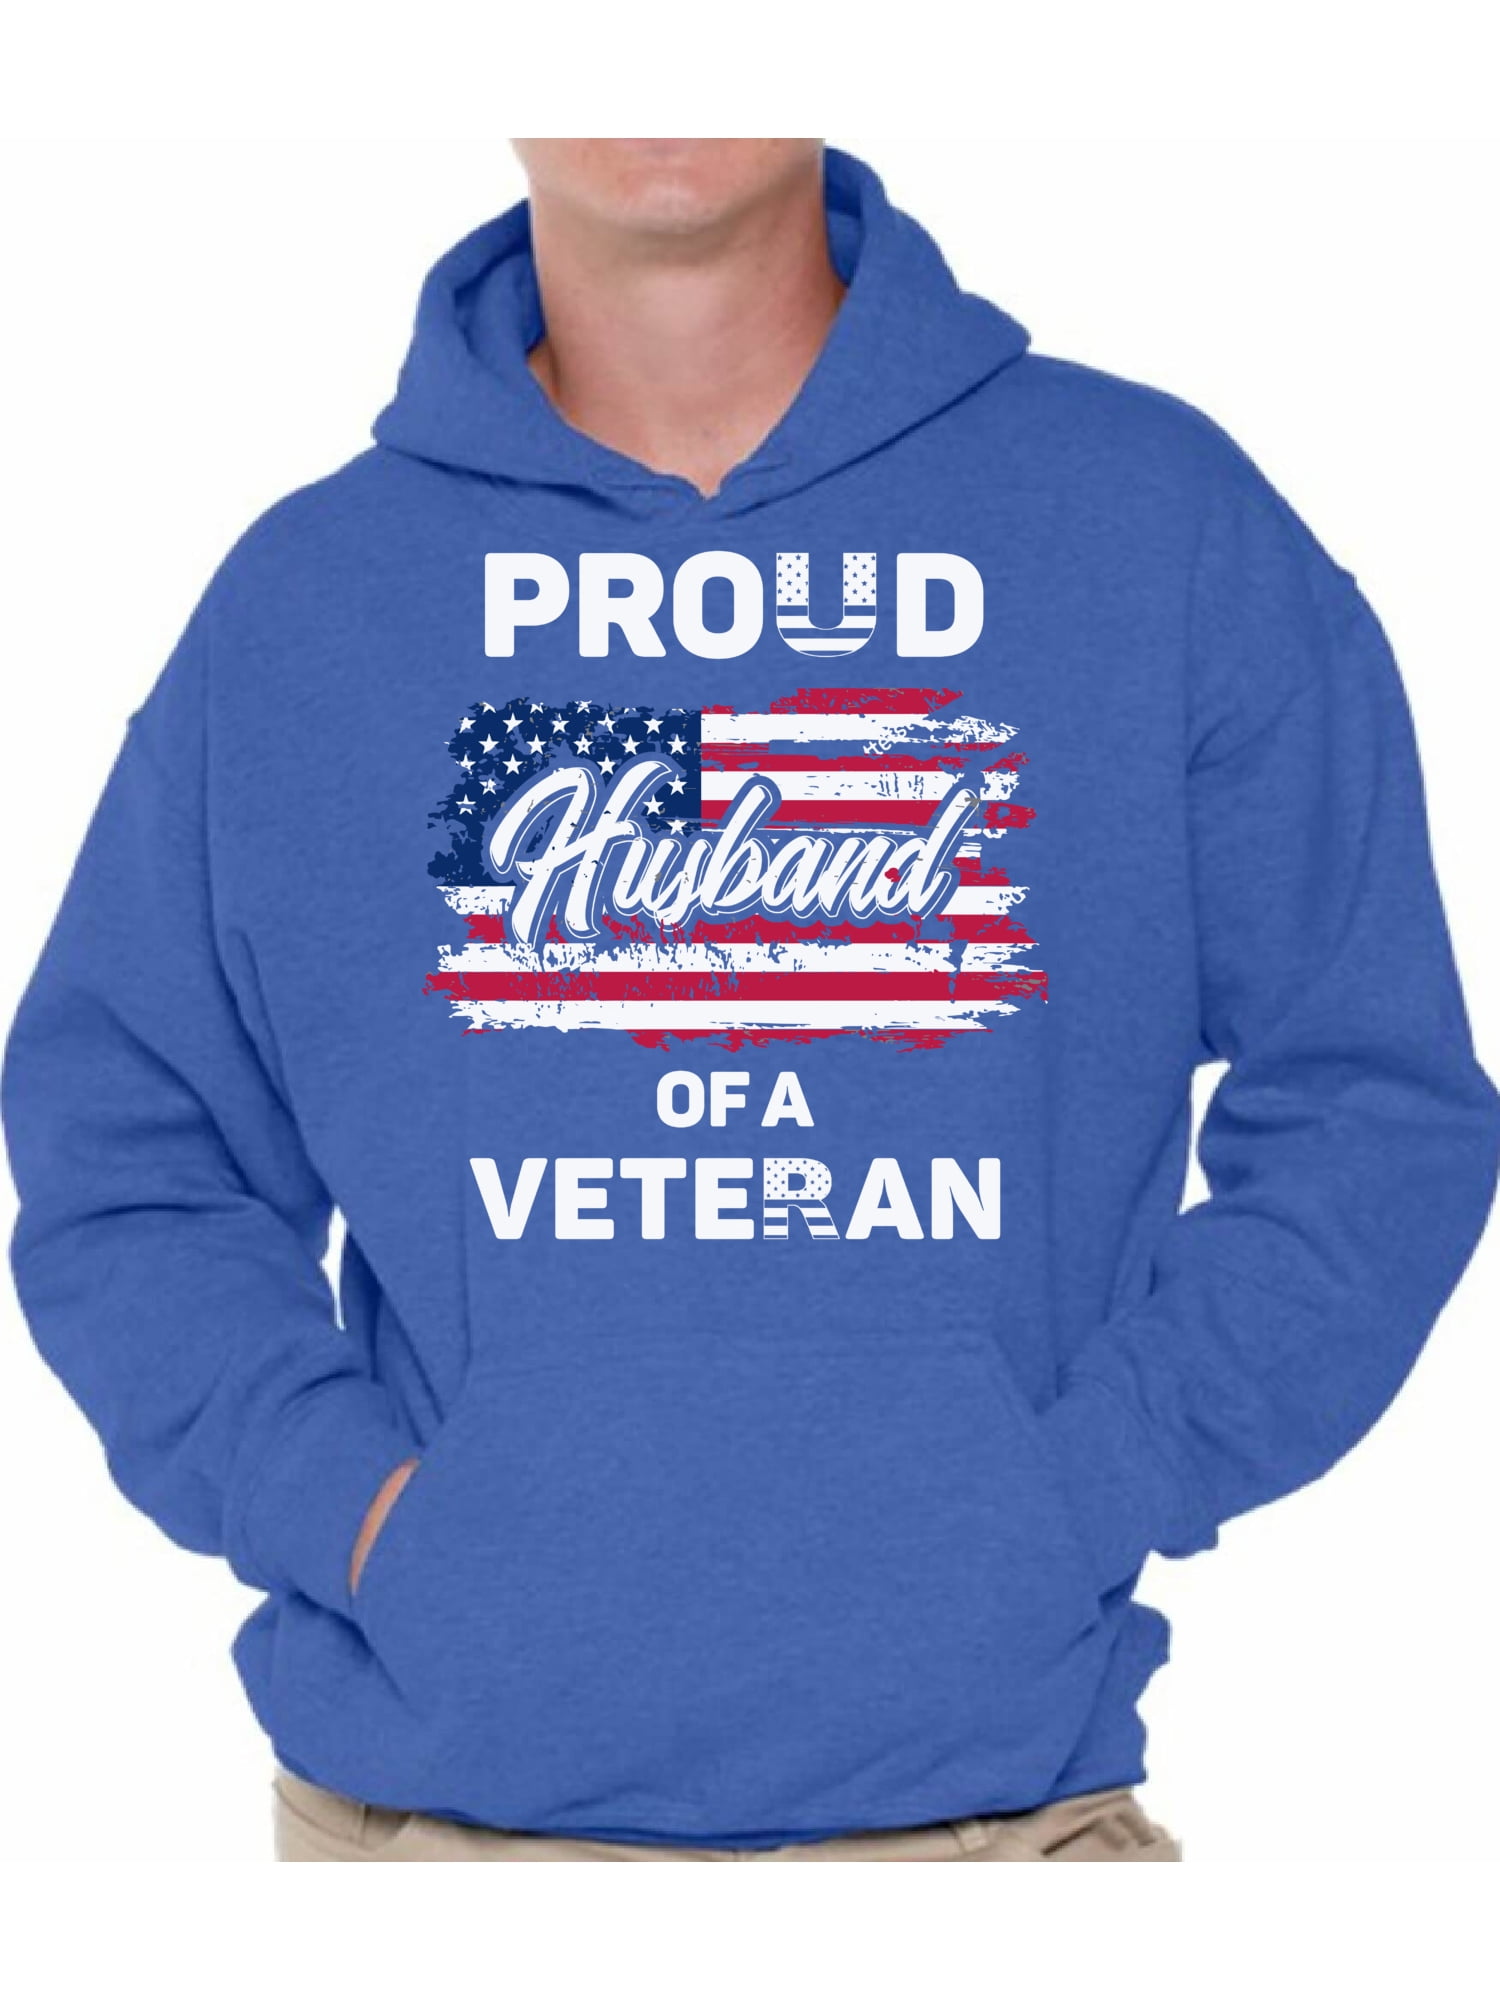 Awkward Styles Proud Husband of a Veteran Hoodie 51 States Veteran Sweater for Husband